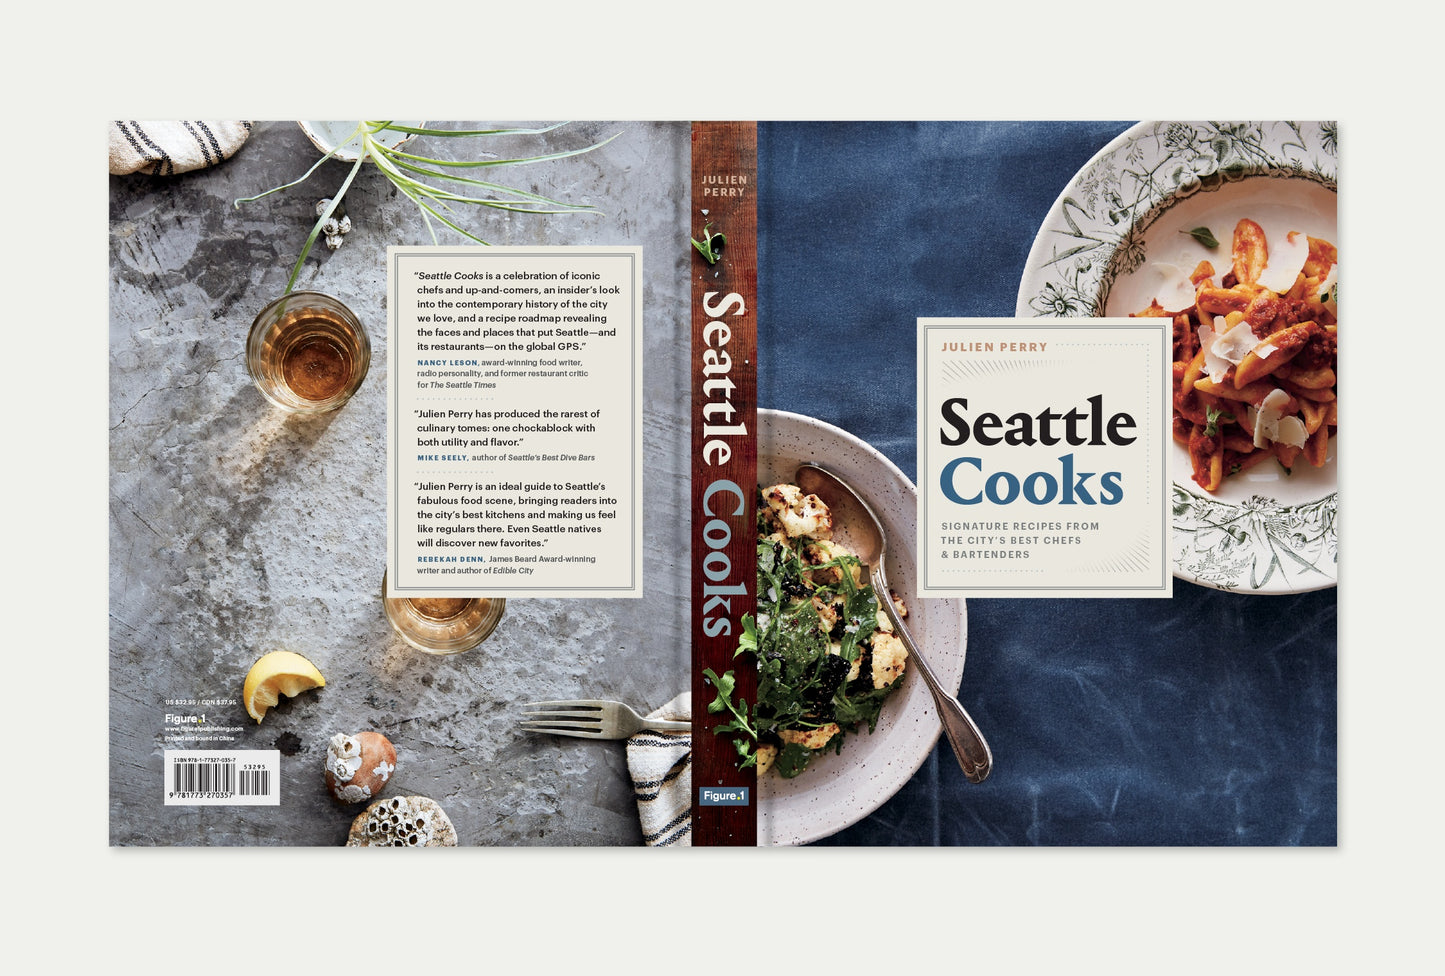 Seattle Cooks